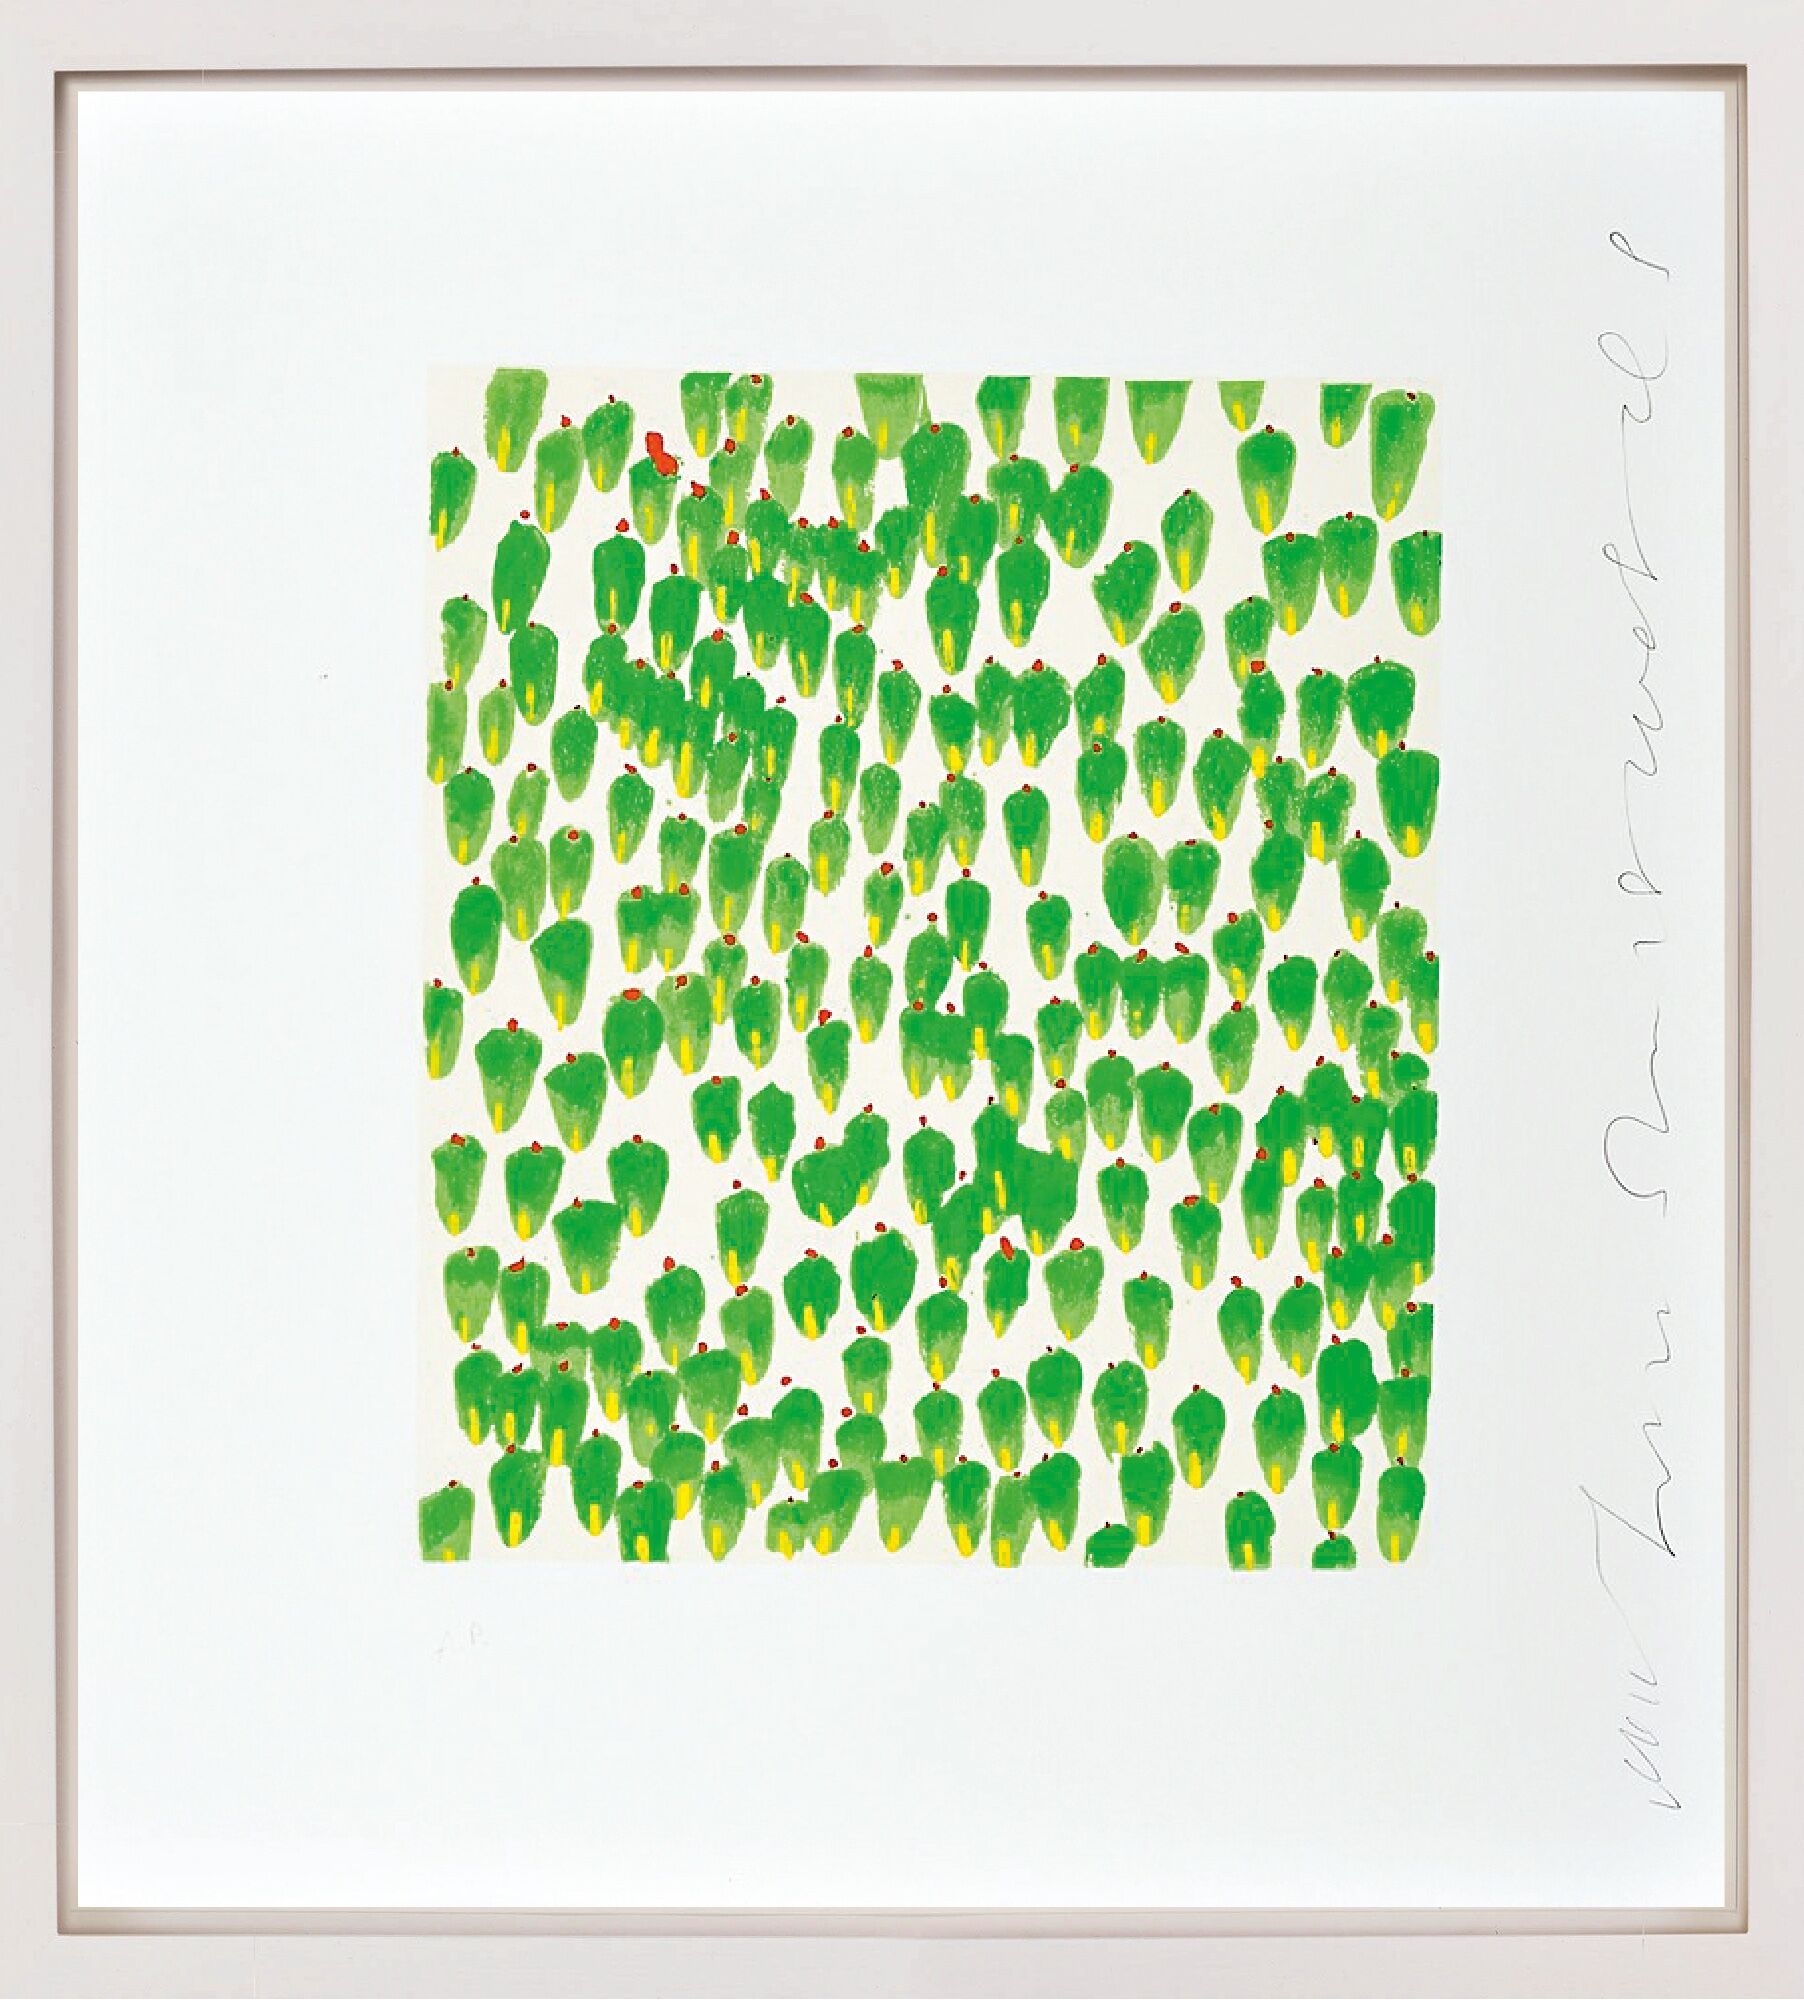 Tableau "Wall flowers 30" (2008) von Donald Sultan